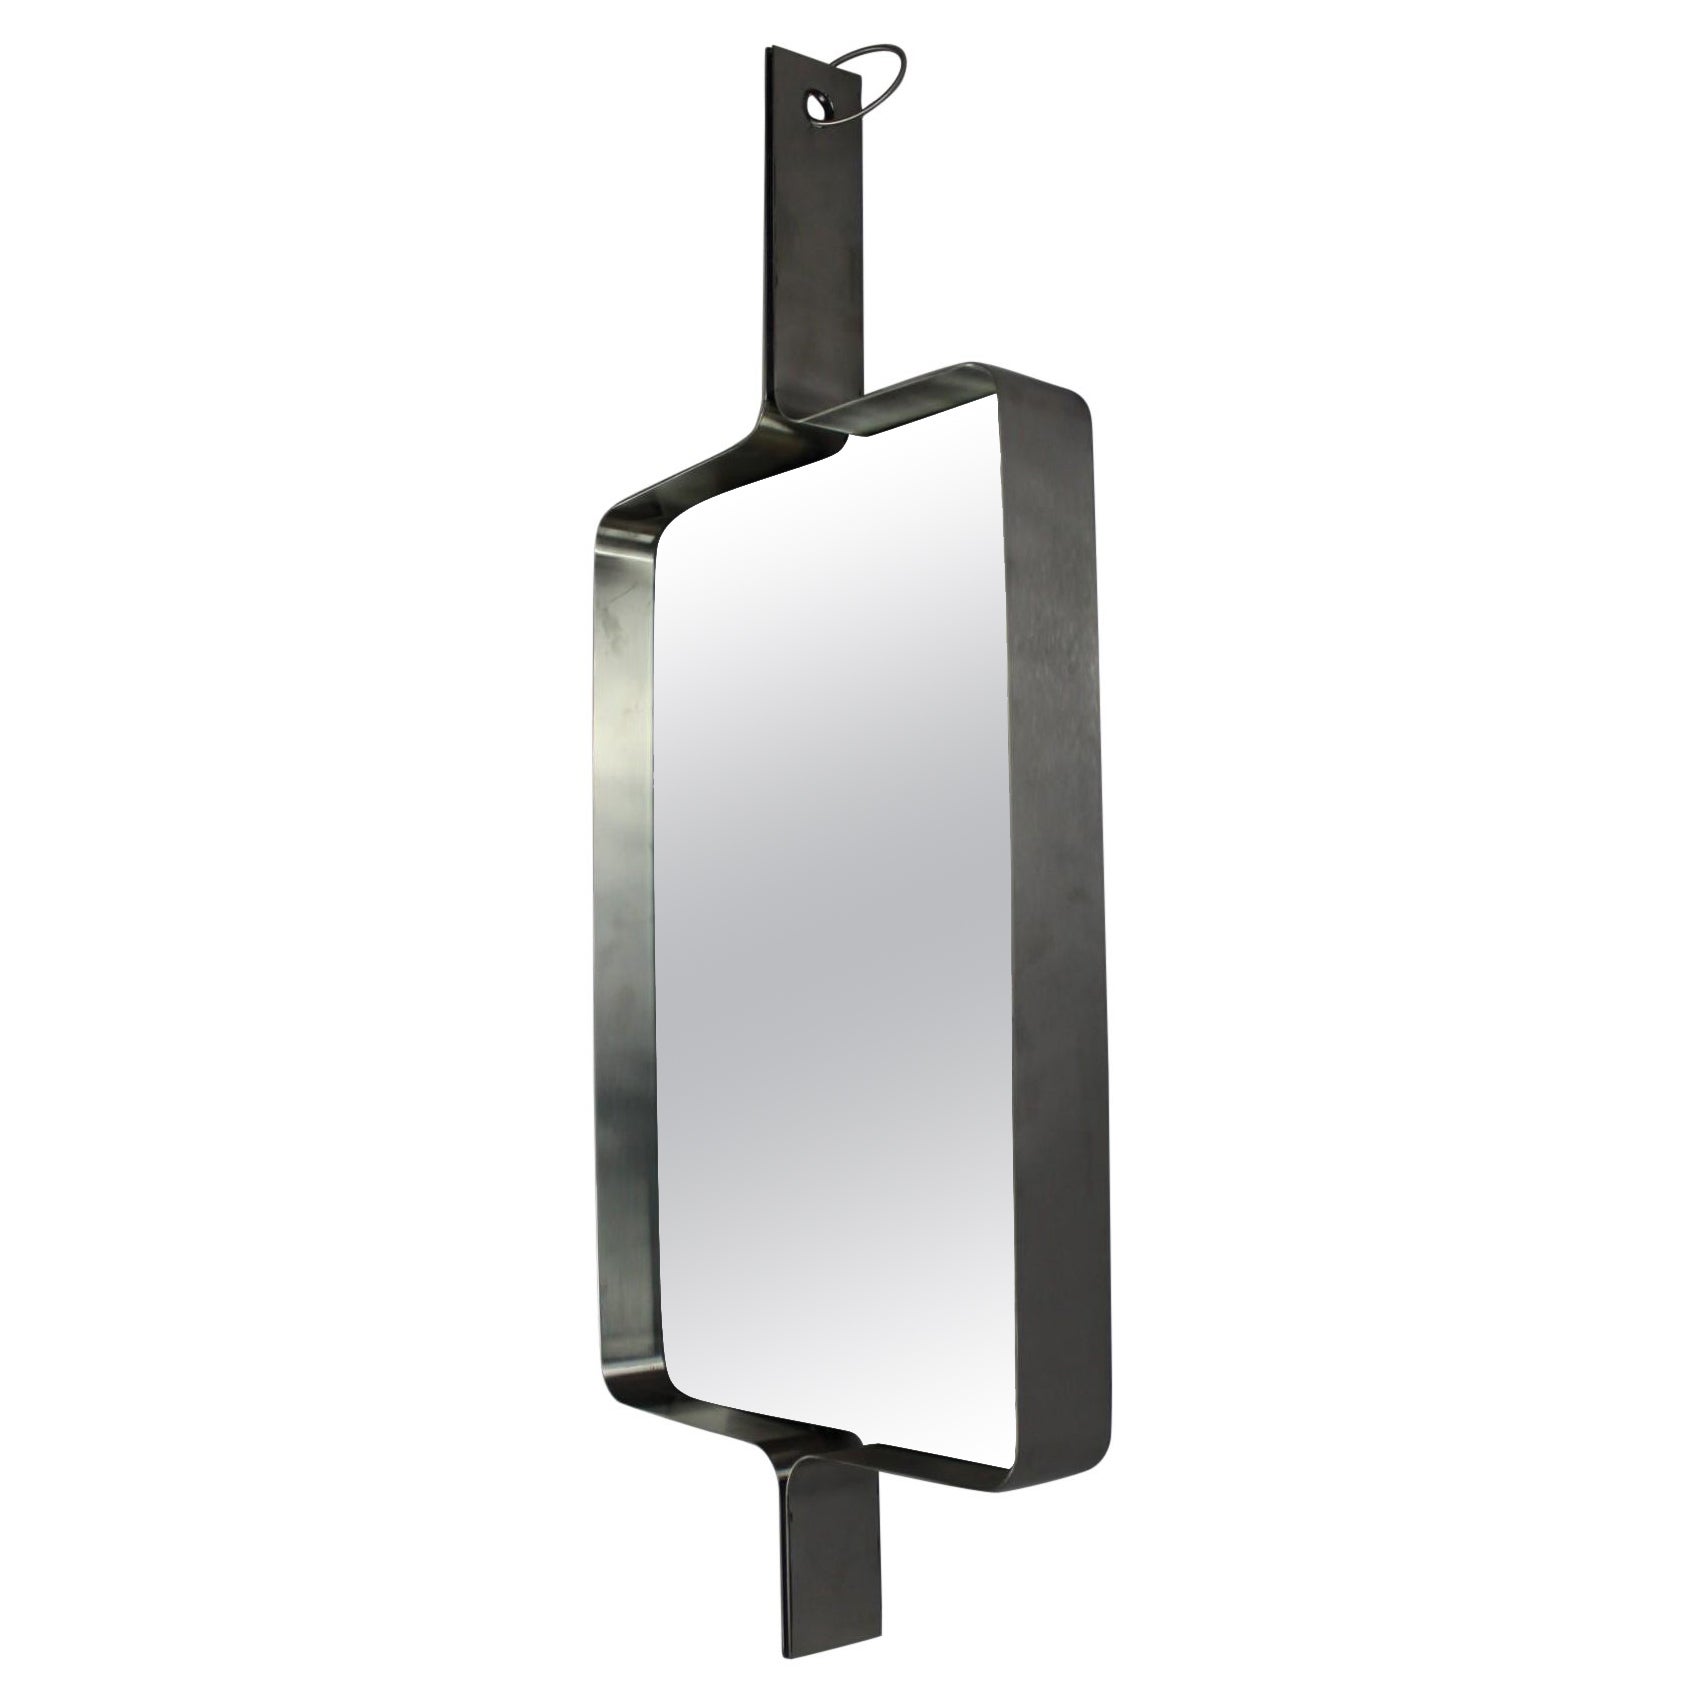 Xavier feal steel brushed rectangular mirror For Sale